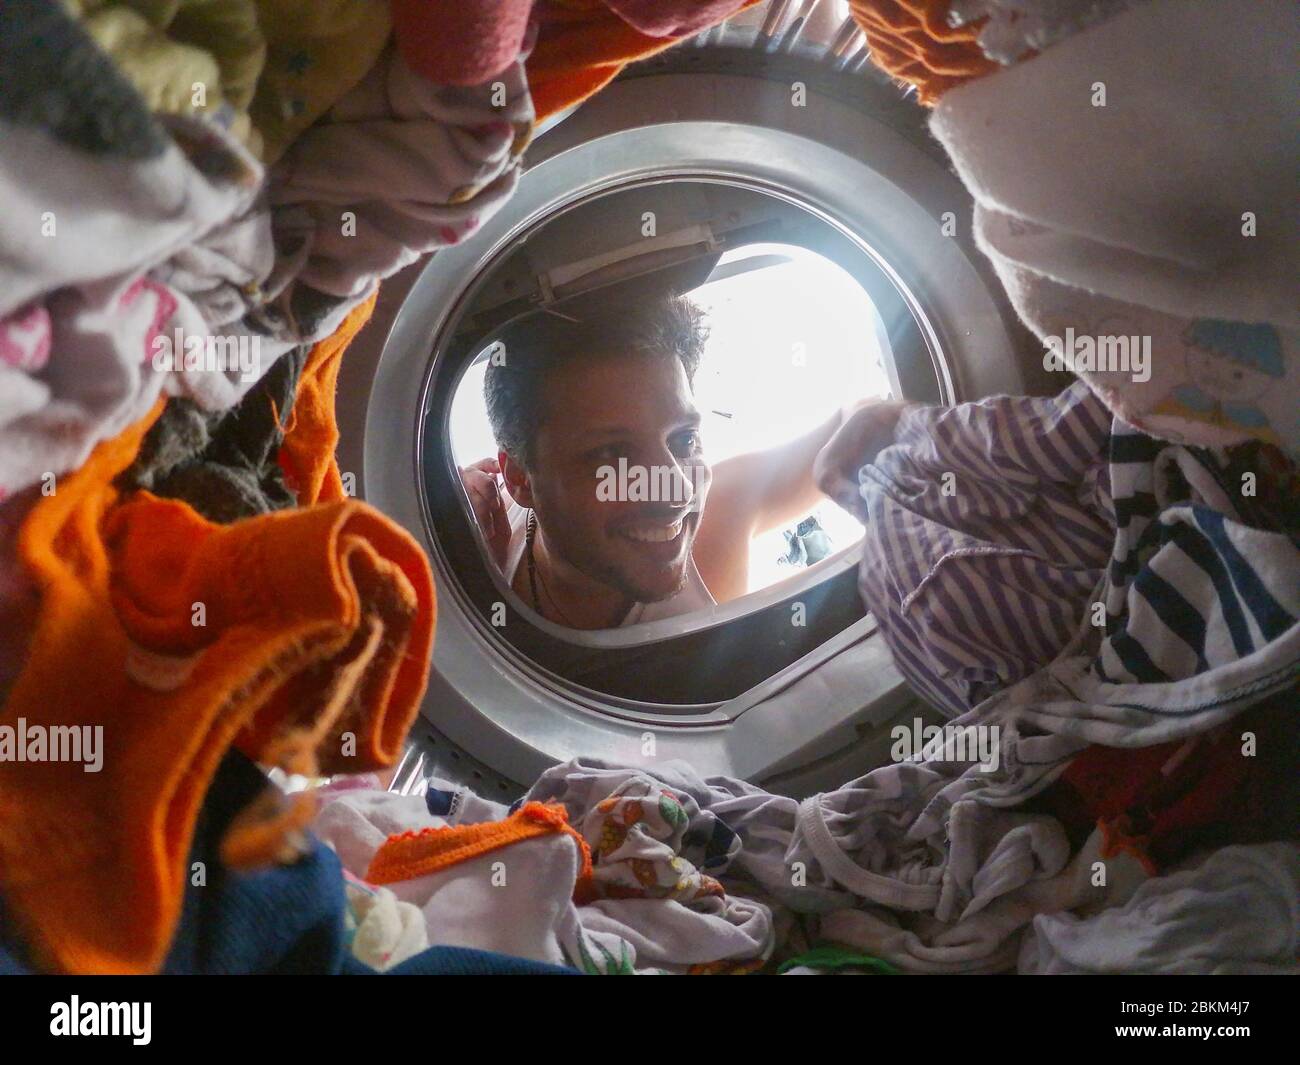 Bearded man using washing machine at home Stock Photo